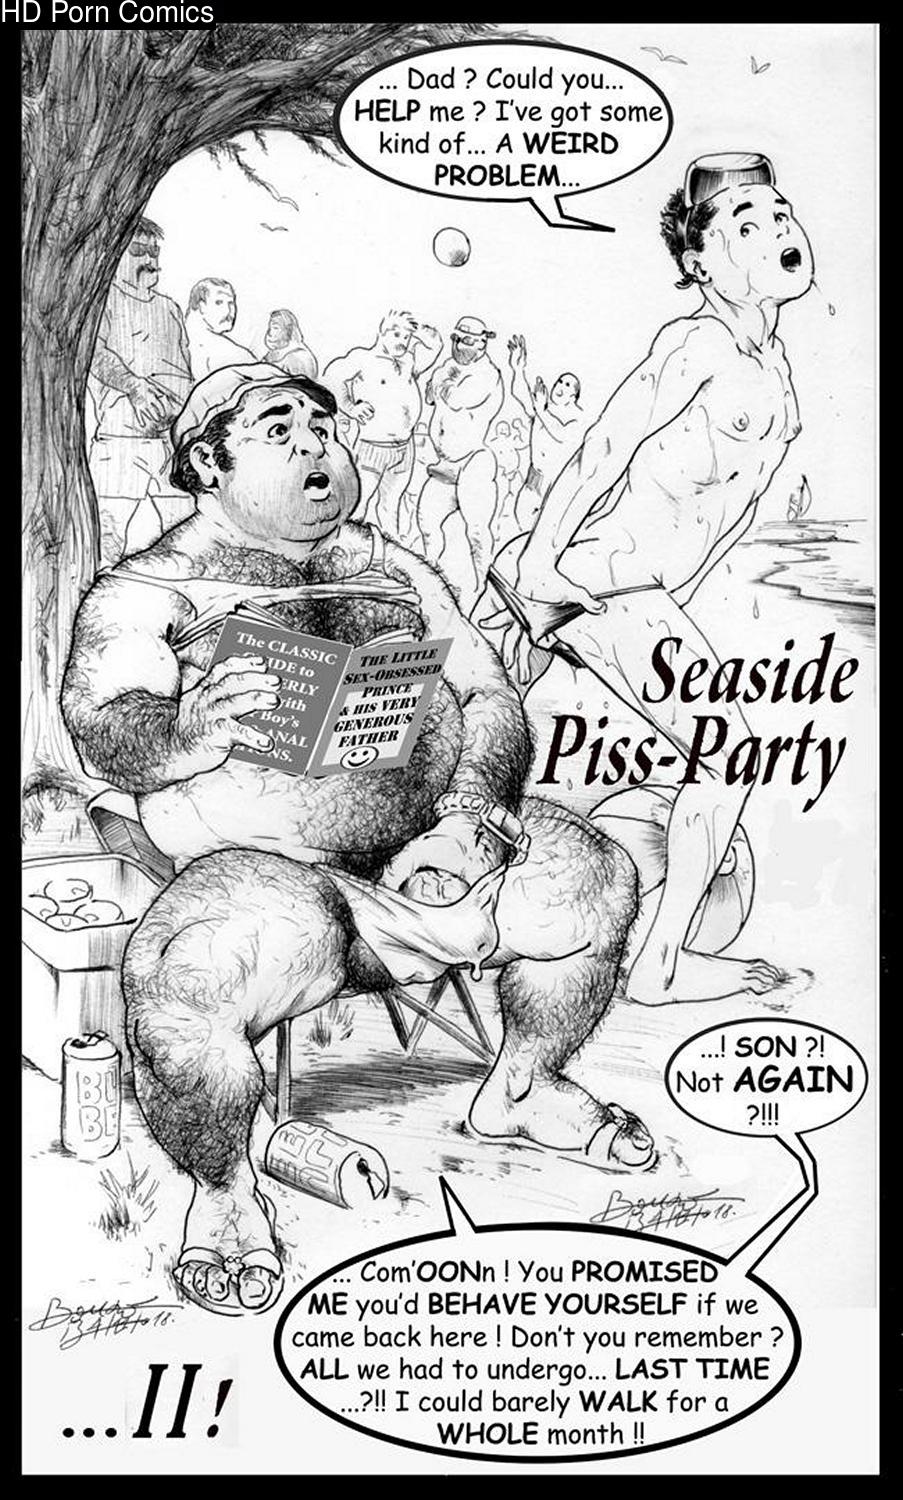 Cartoon Piss Porn - Seaside Piss-Party 2 comic porn â€“ HD Porn Comics